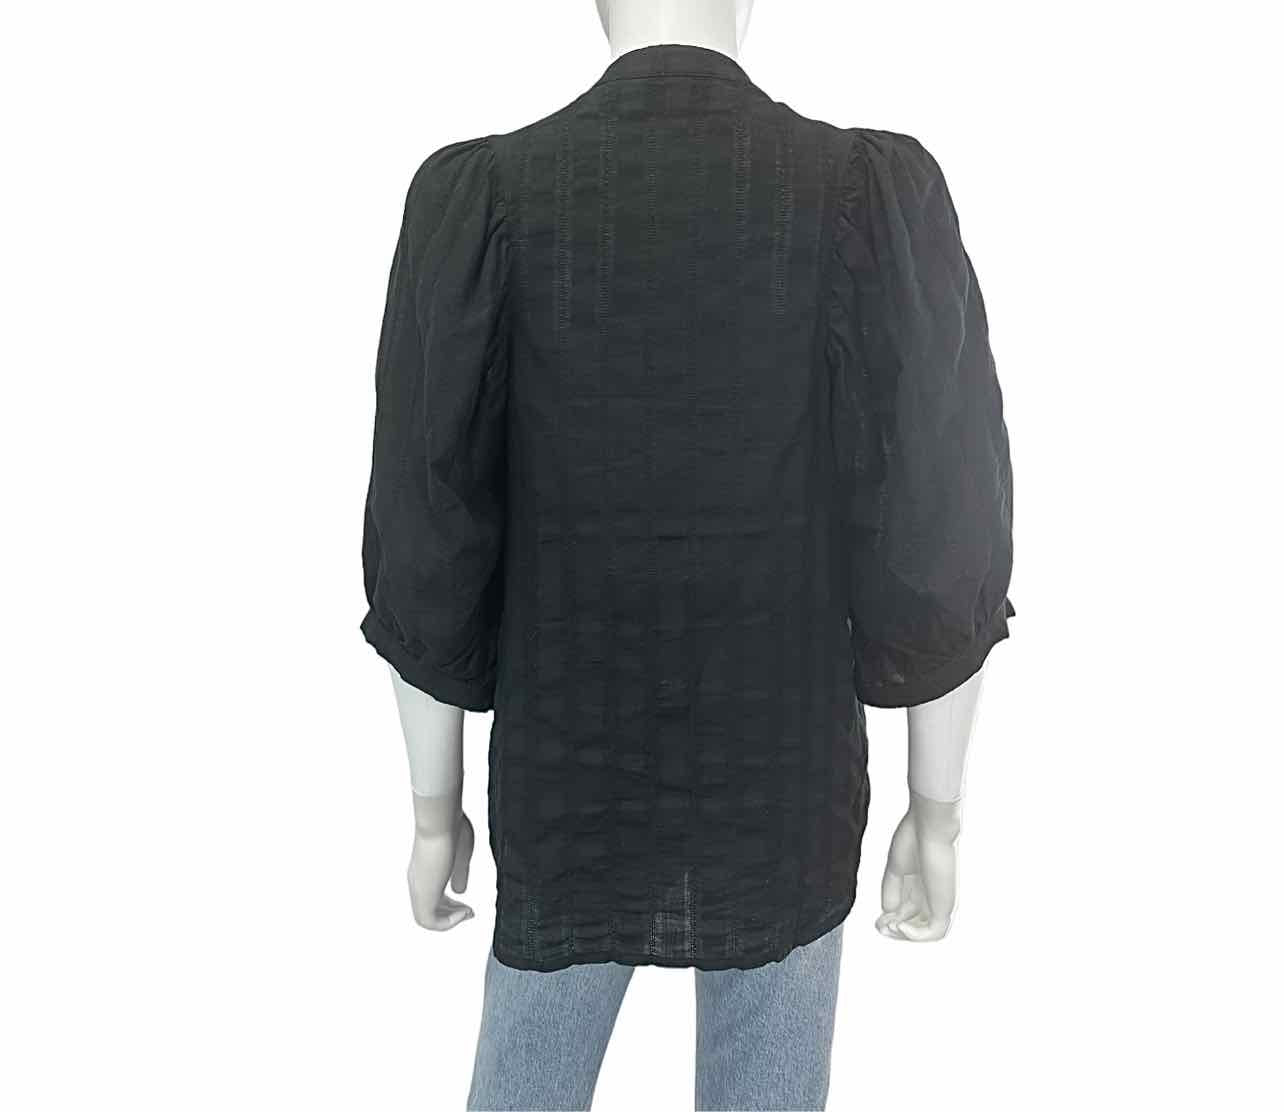 HEIDI MERRICK Black Sheer Stripe 3/4 Sleeve Top Size L